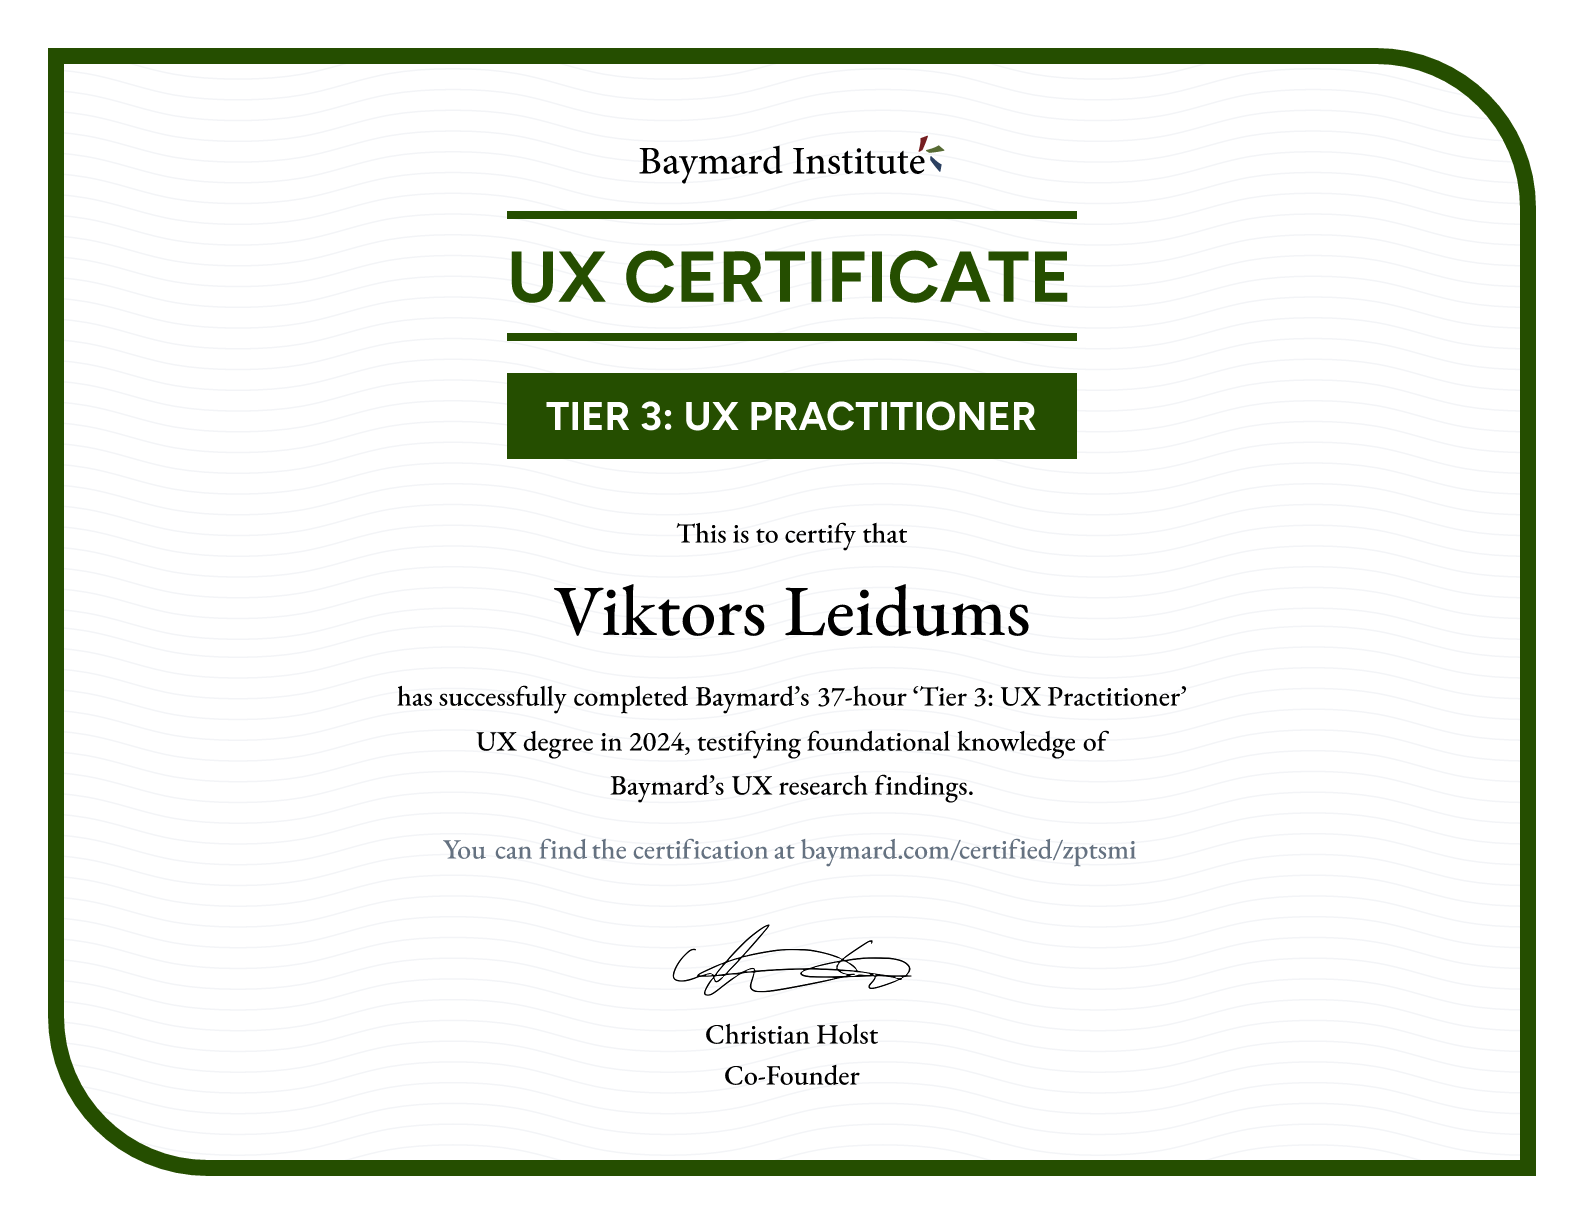 Viktors Leidums’s certificate